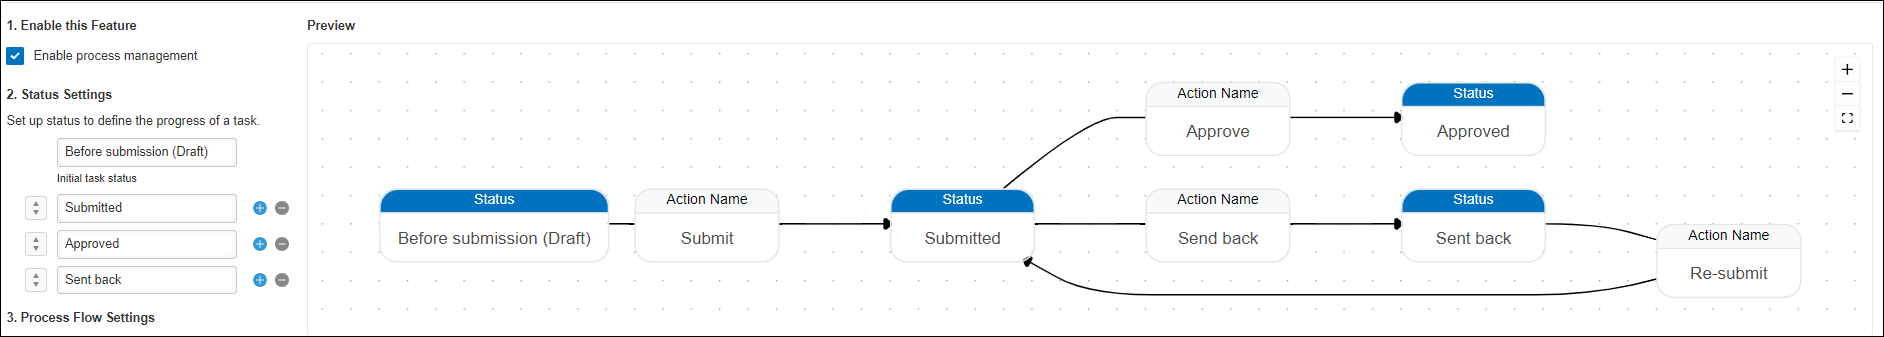 Screenshot: Process Management settings are shown in the flow chart on the "Process Management" screen